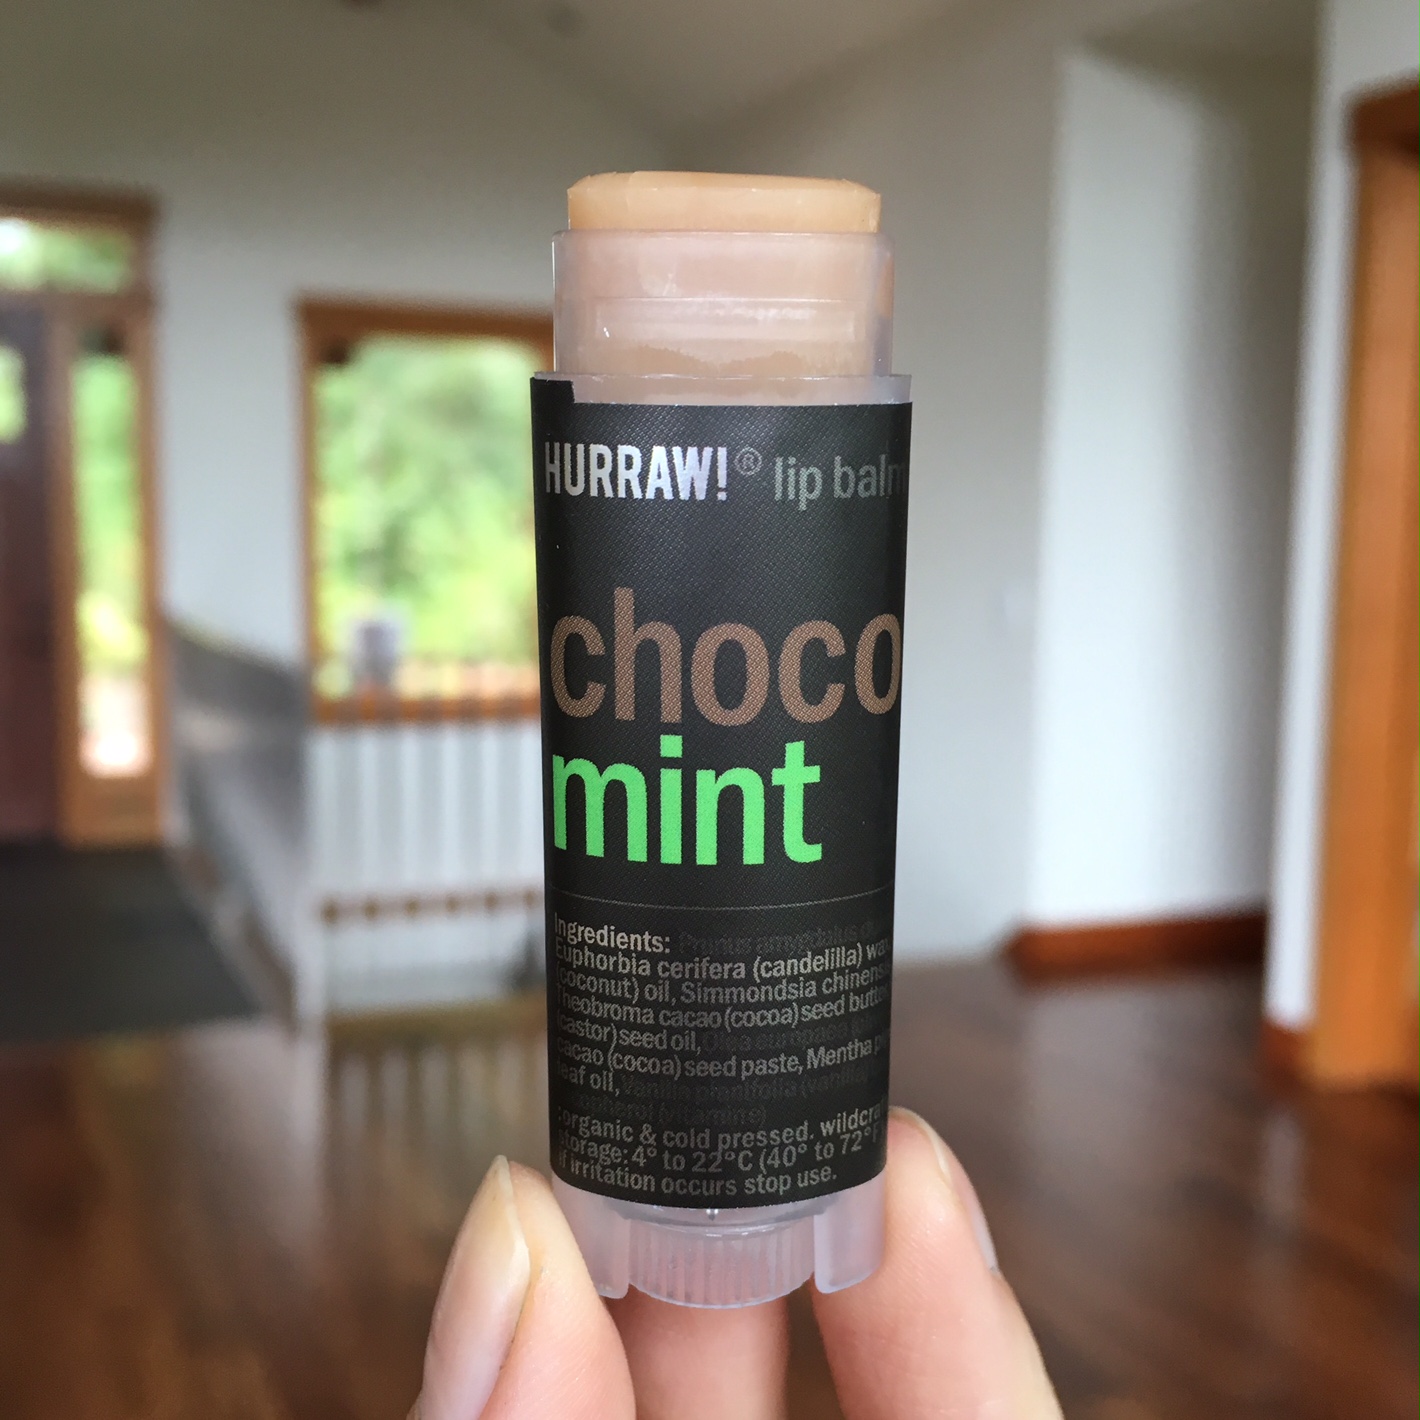 hurraw-choco-mint-lip-balm